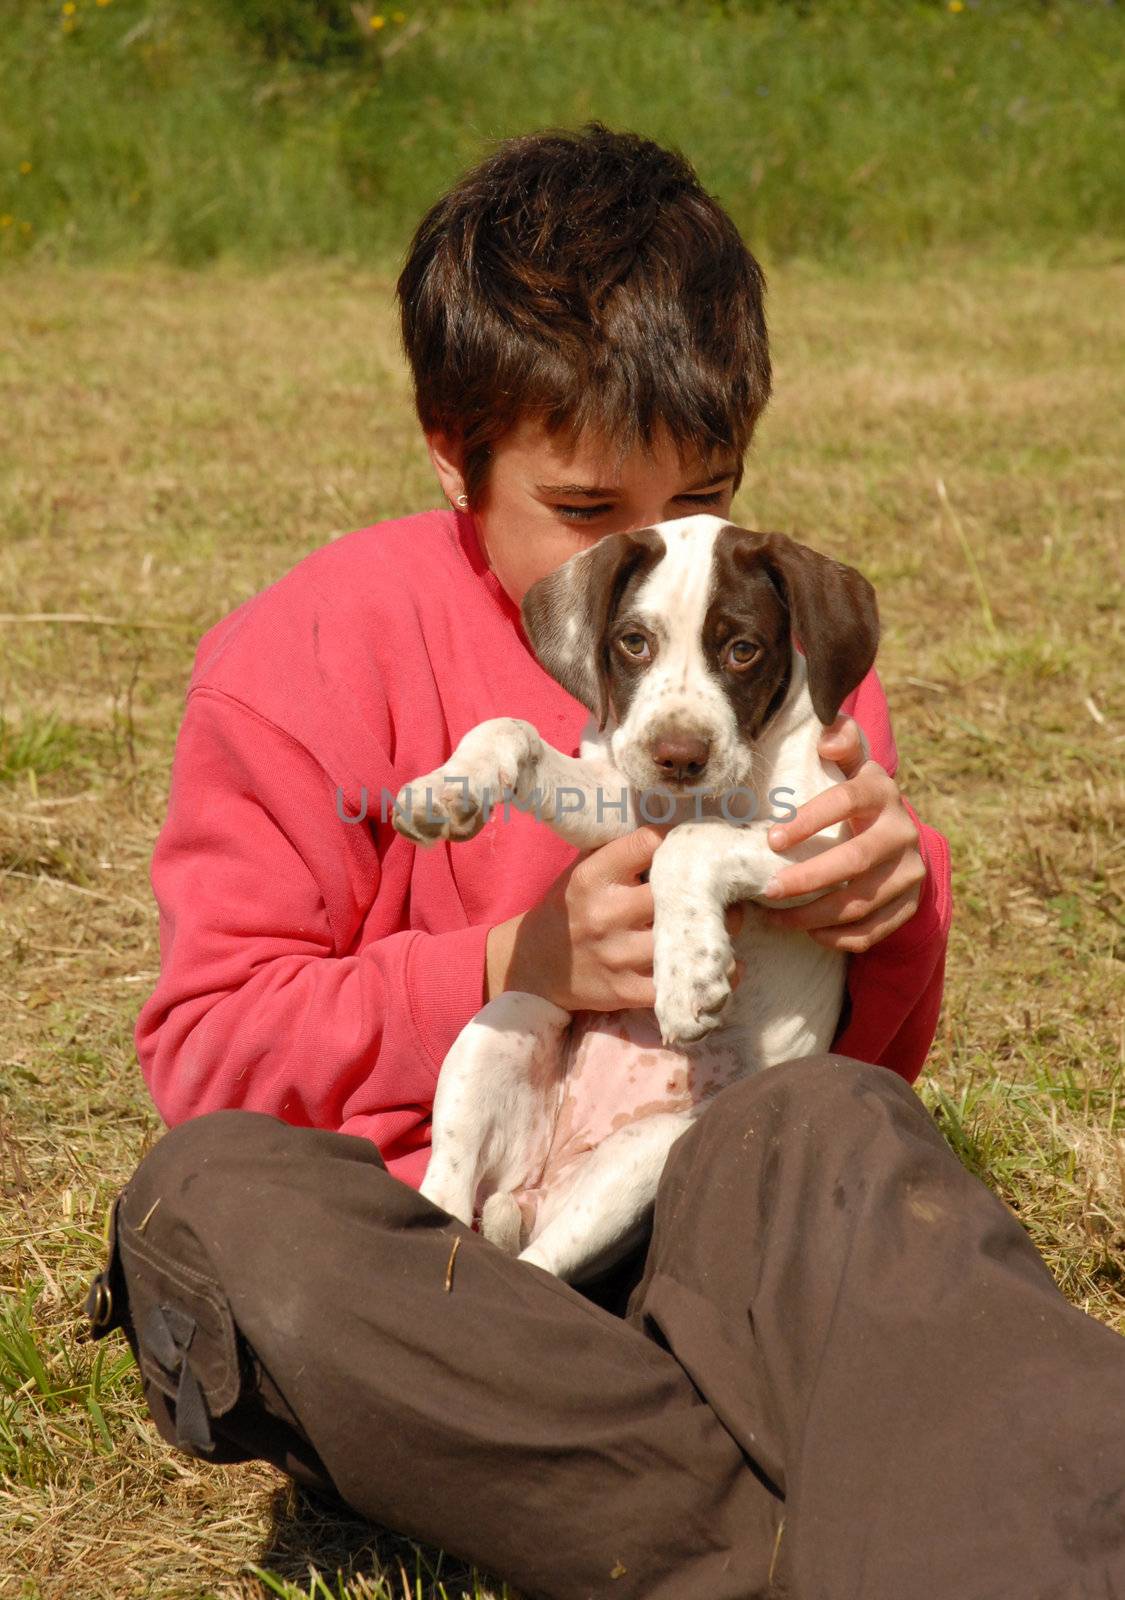 child and puppy by cynoclub